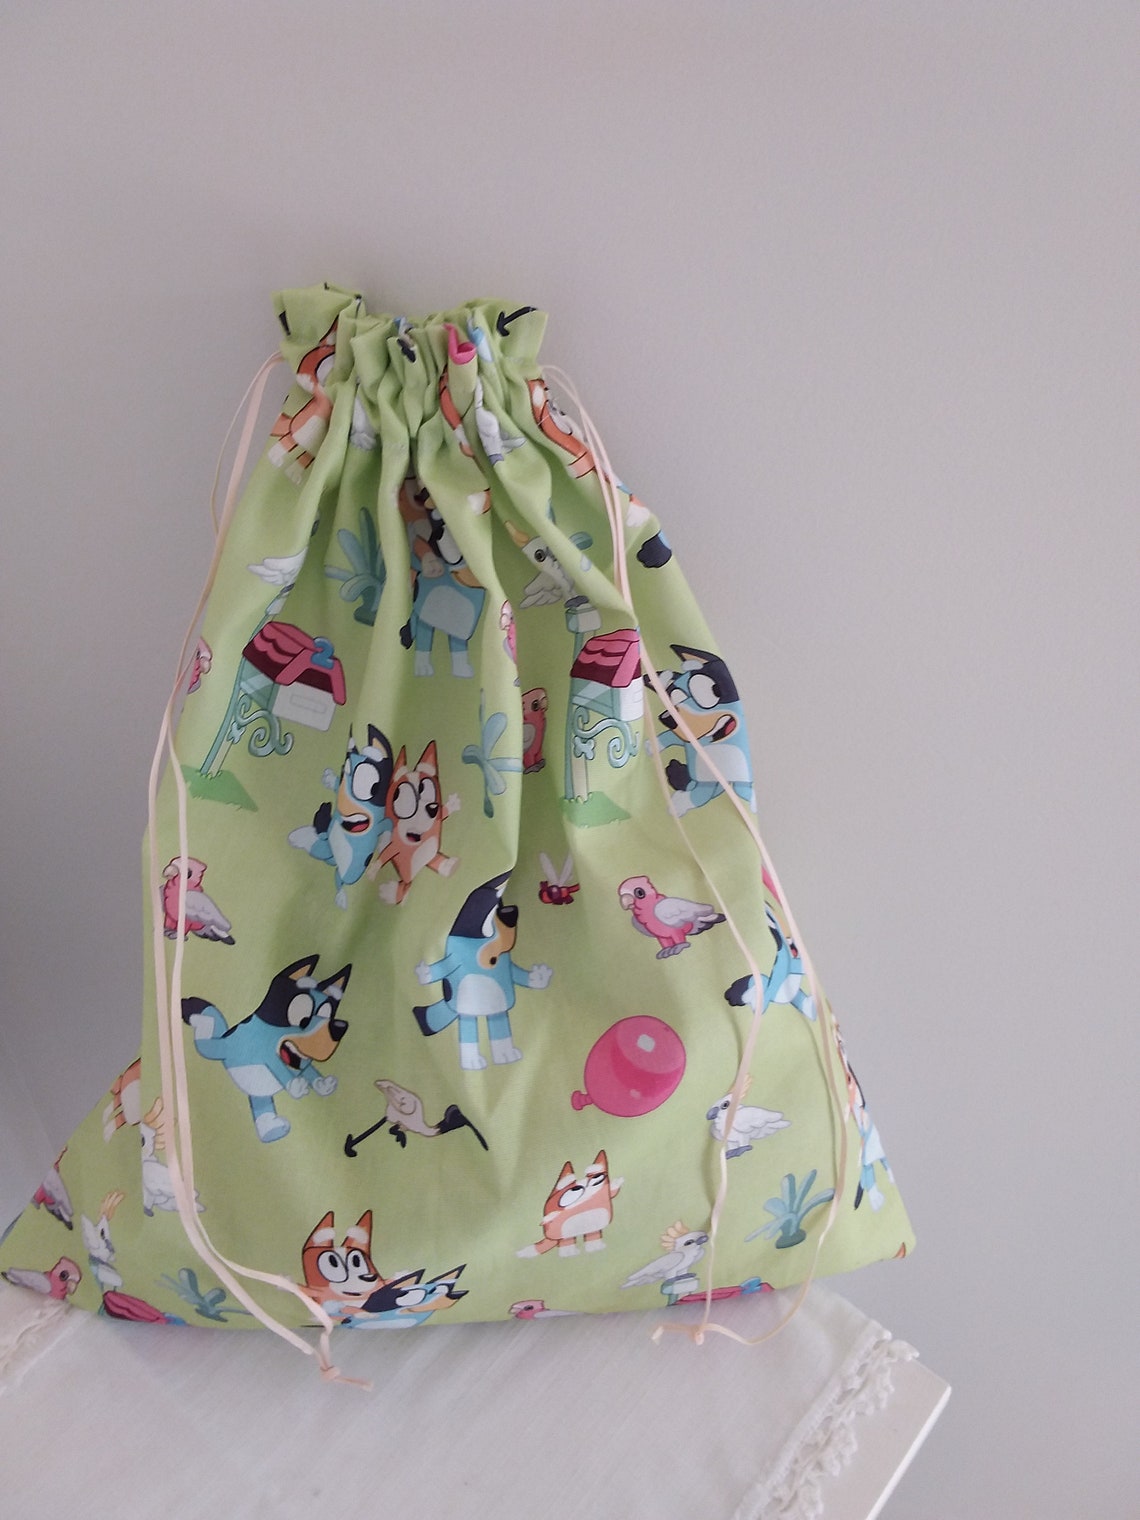 Bluey Double Drawstring Bag Fabric Large for Children's | Etsy